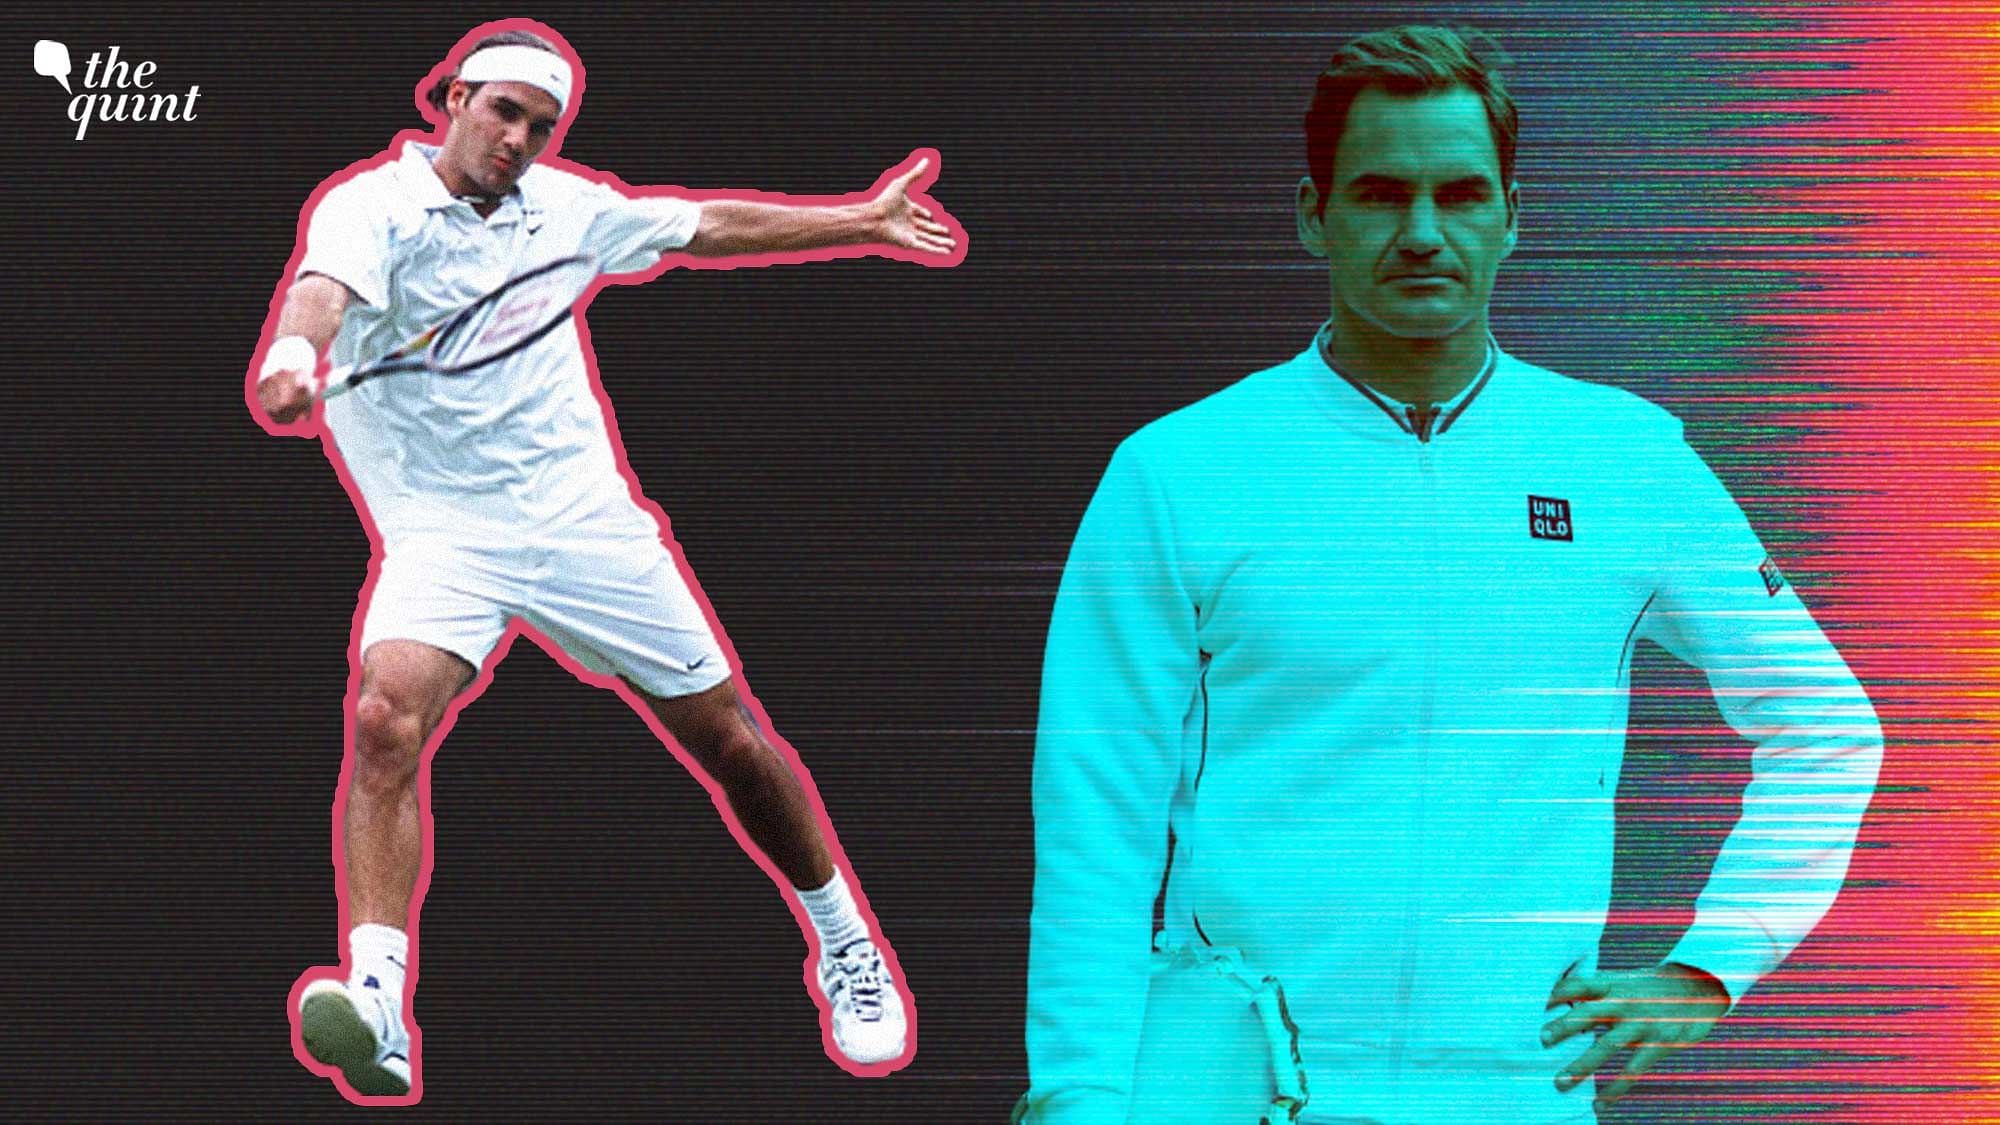 <div class="paragraphs"><p>A look back at the ten best wins of tennis legend Roger Federer.</p></div>